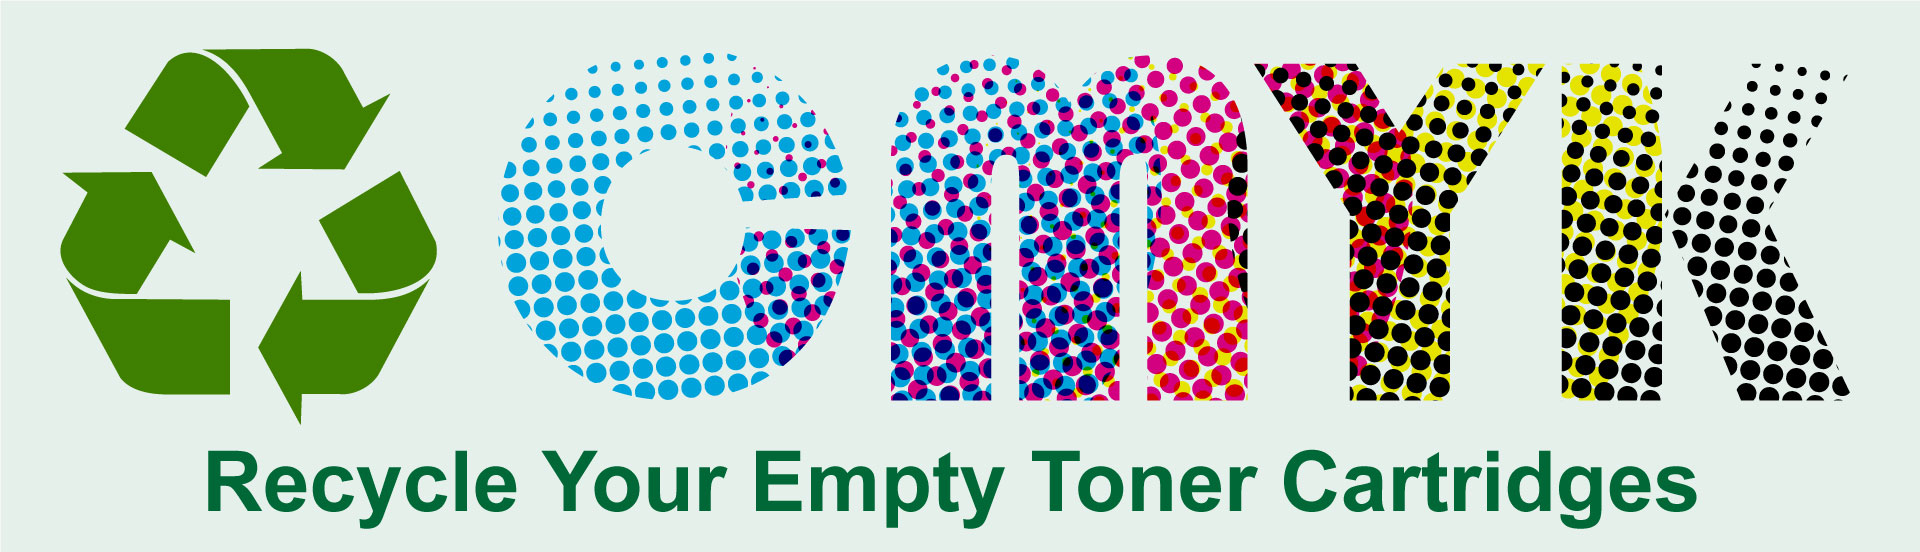 Printer Toner Recycling Program